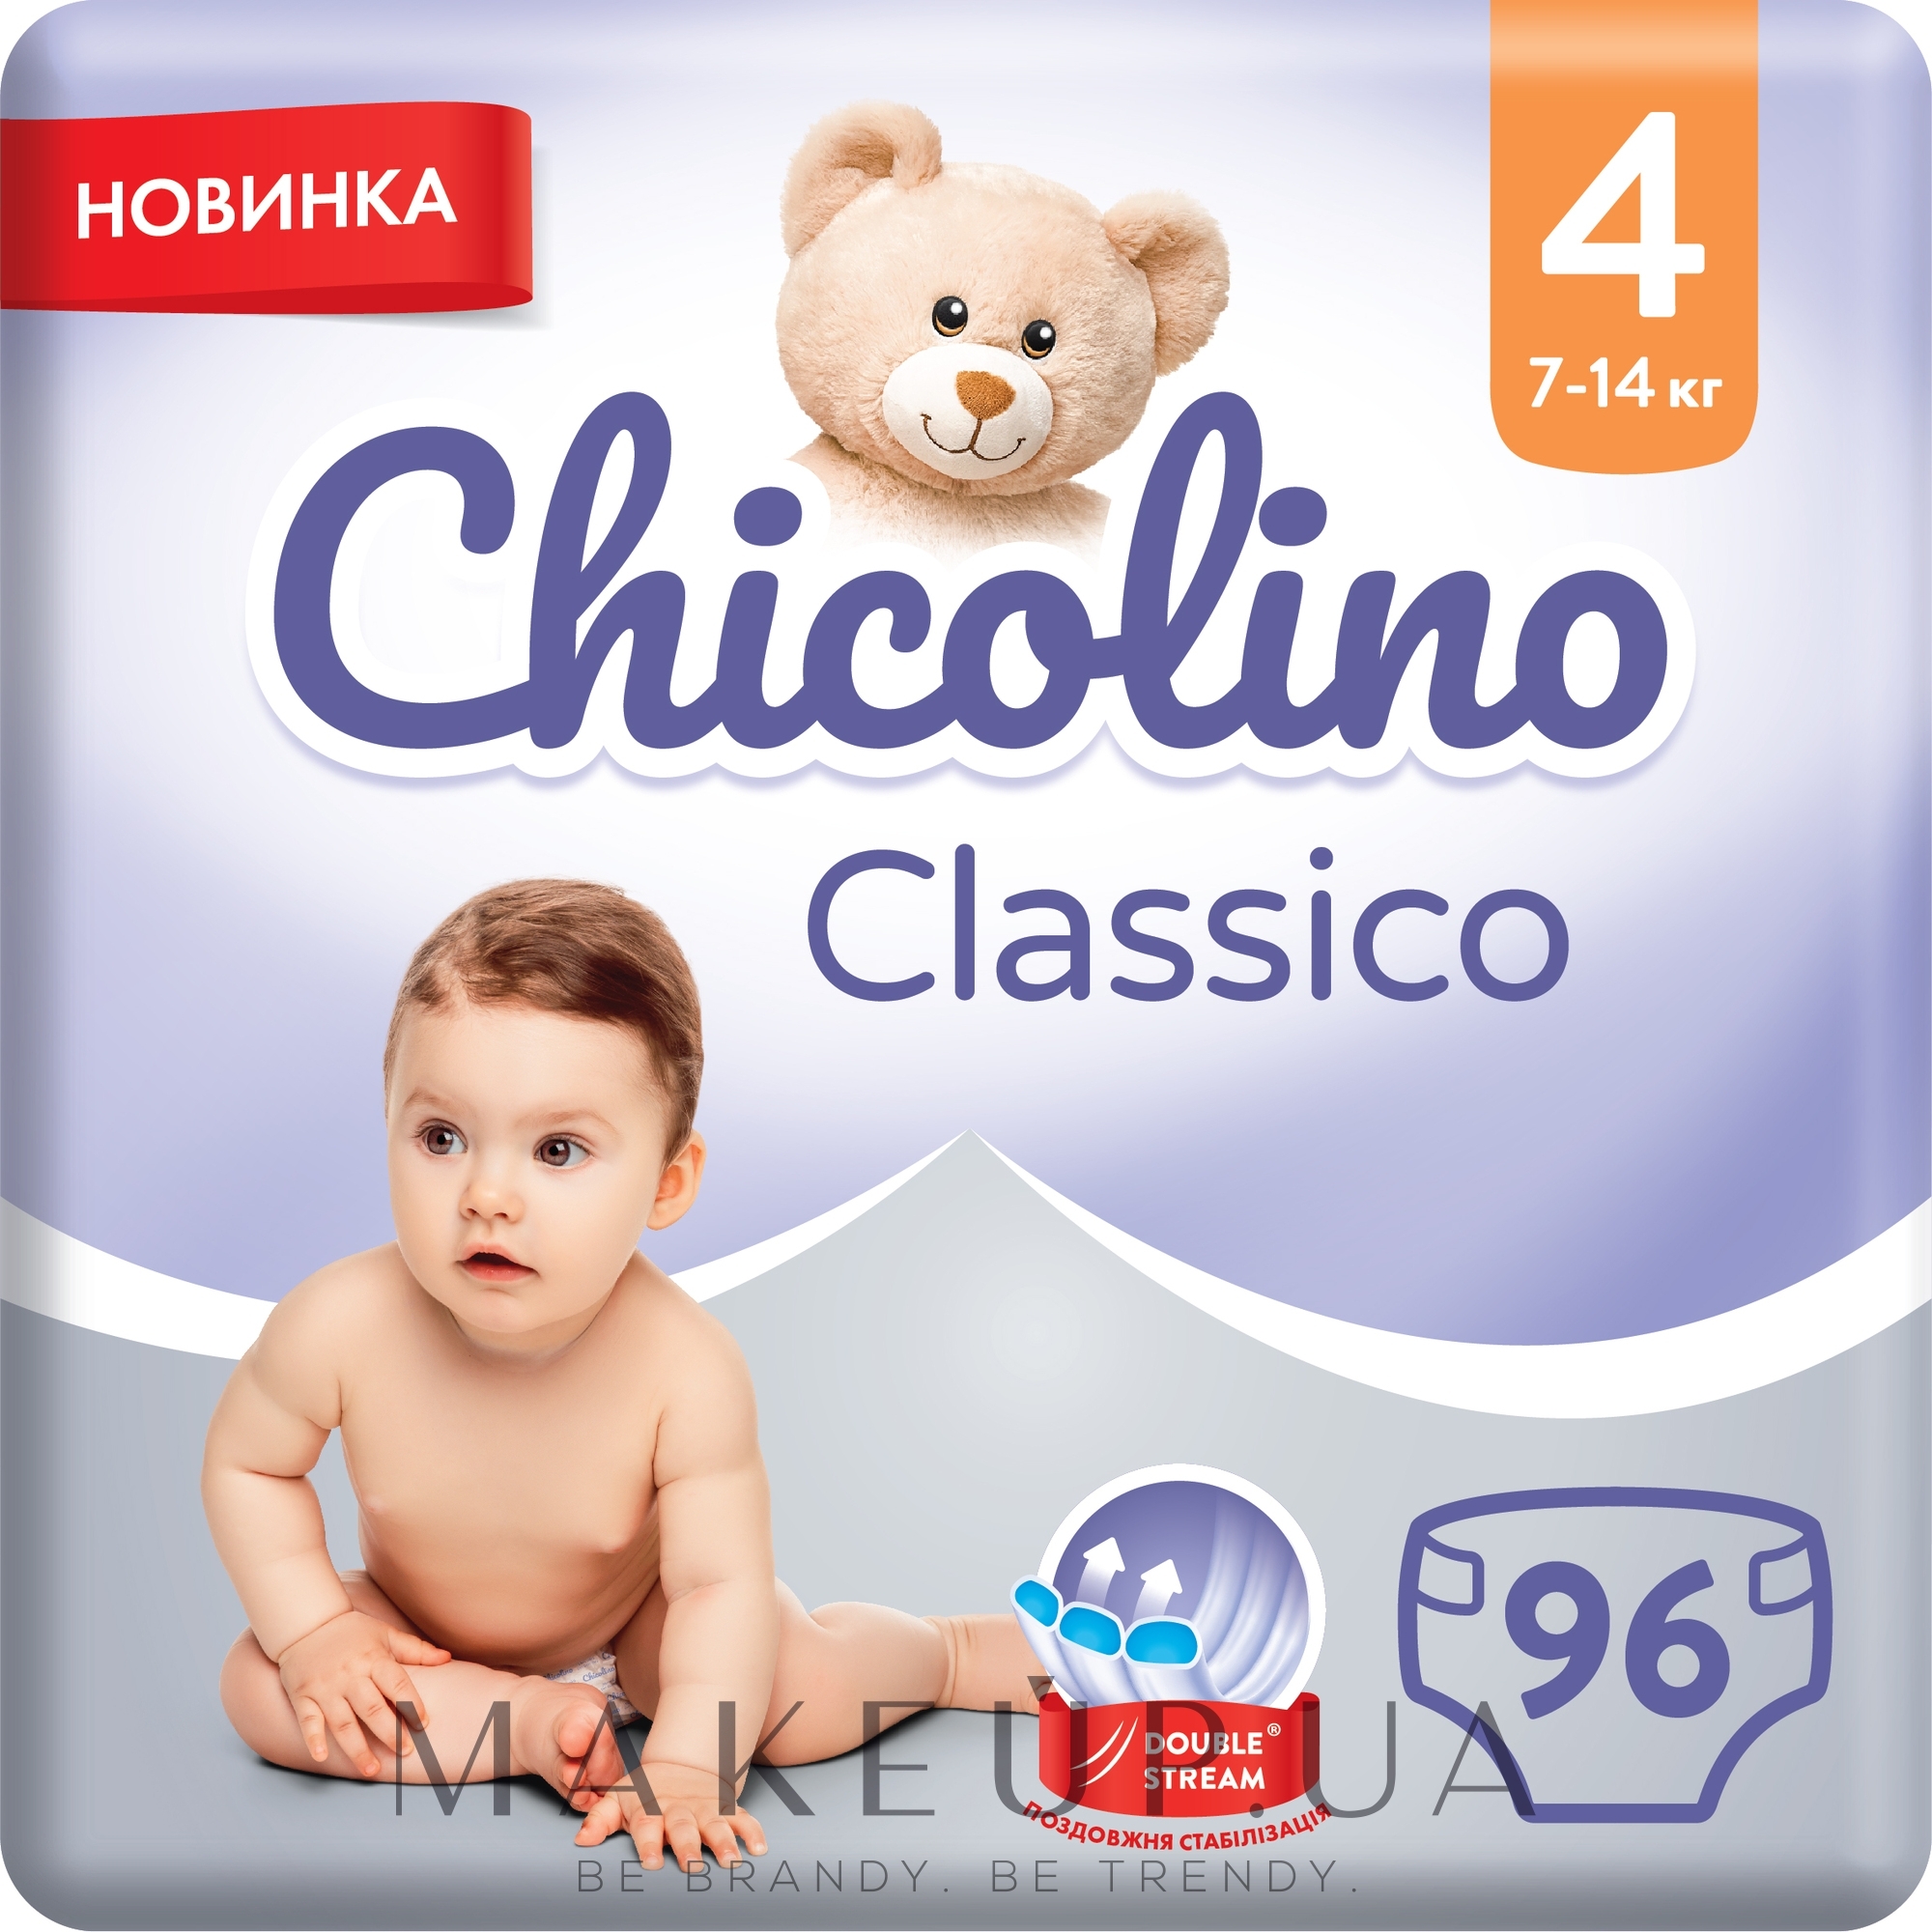 Детские подгузники "Classico", 7-14 кг, размер 4, 96 шт. - Chicolino — фото 96шт